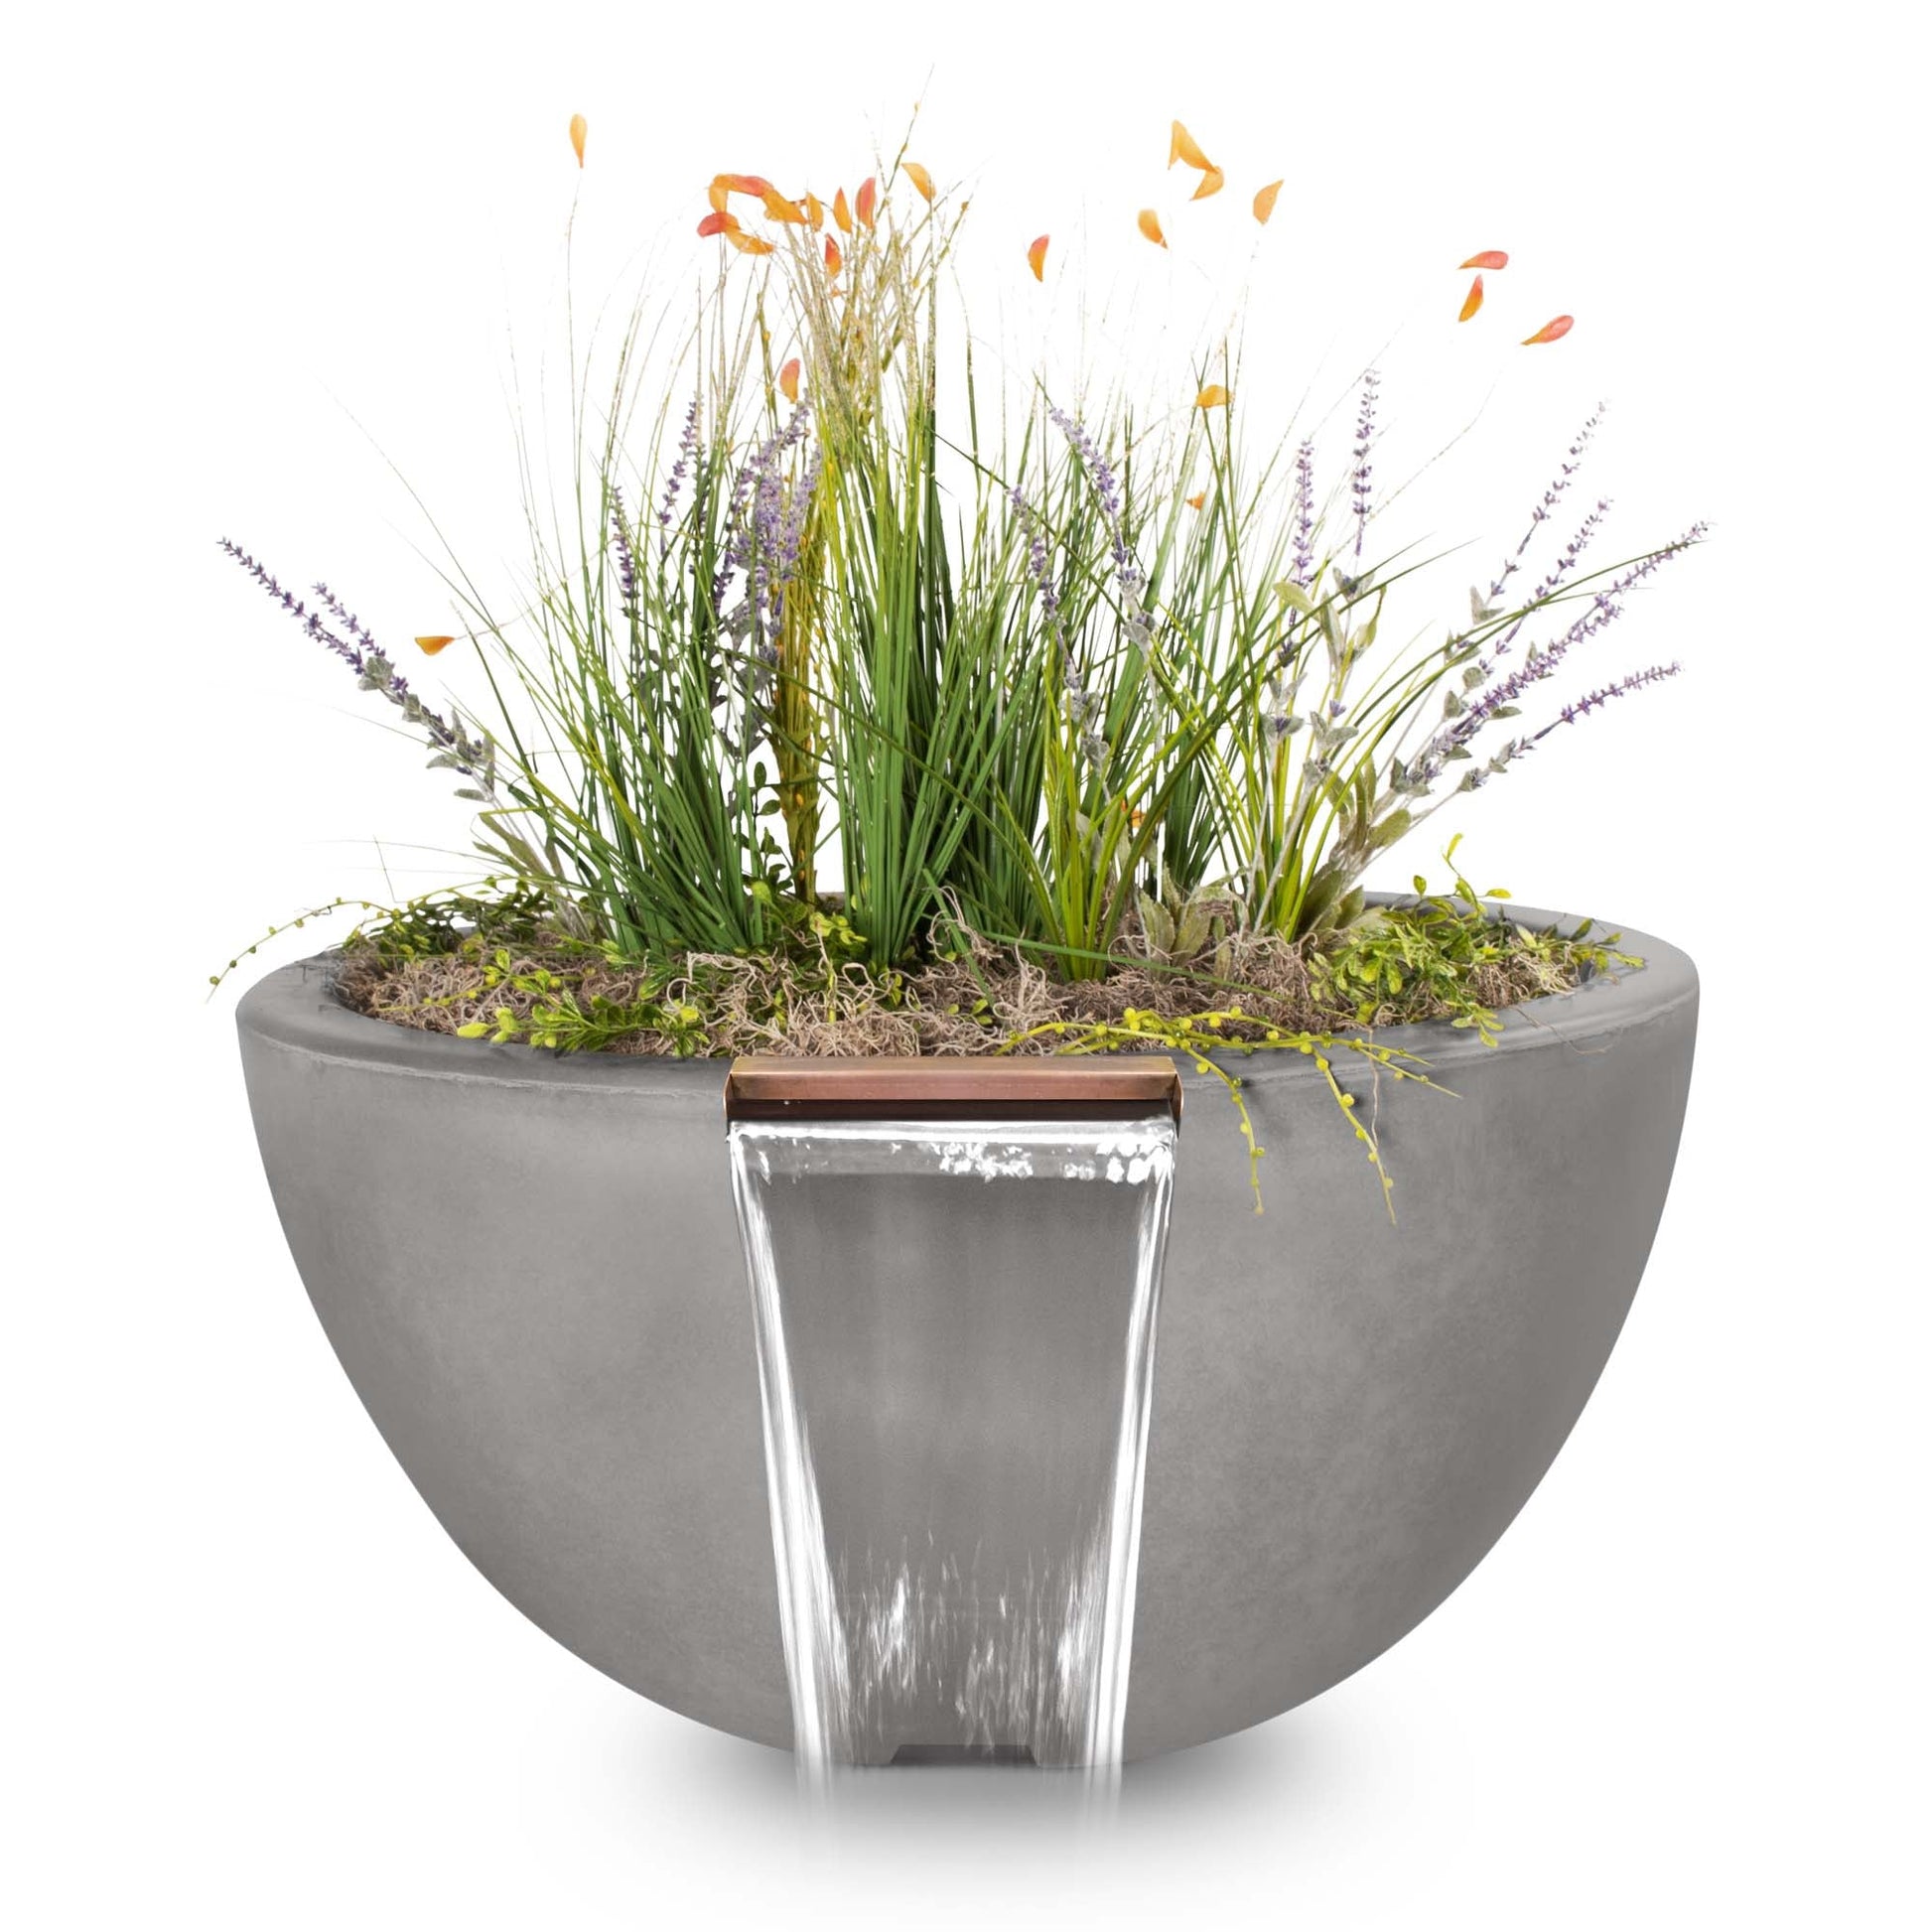 38" Luna GFRC Planter Bowl with Water-Novel Home